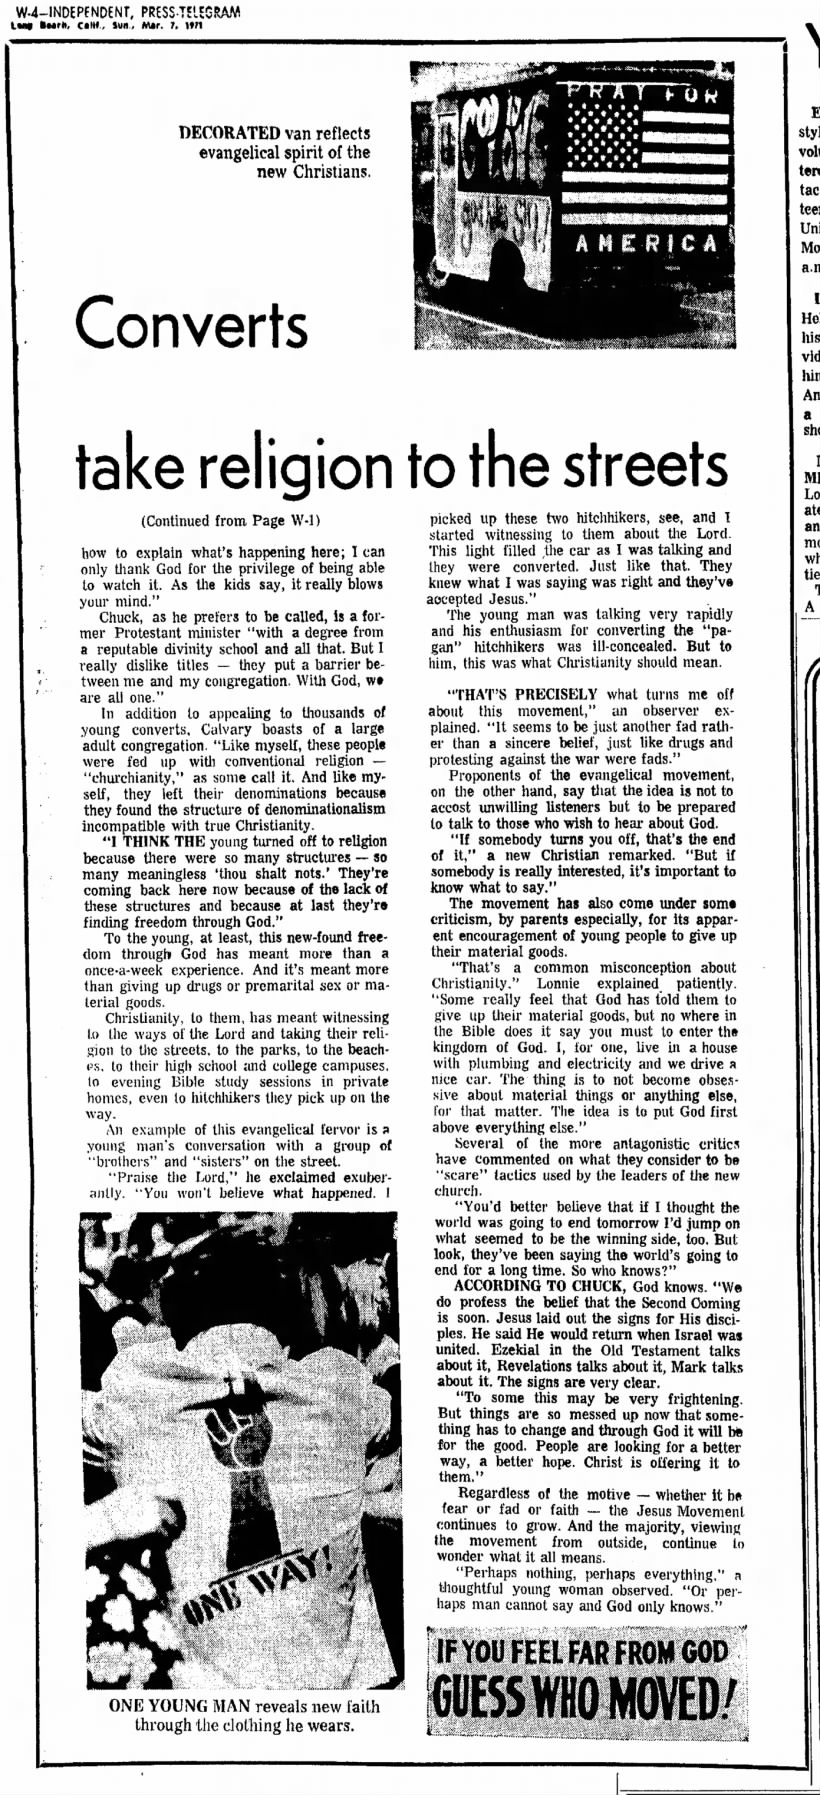 Lonnie Frisbee/Calvary Chapel article jump, March 7 1971 Long Beach Independent Press-Telegram